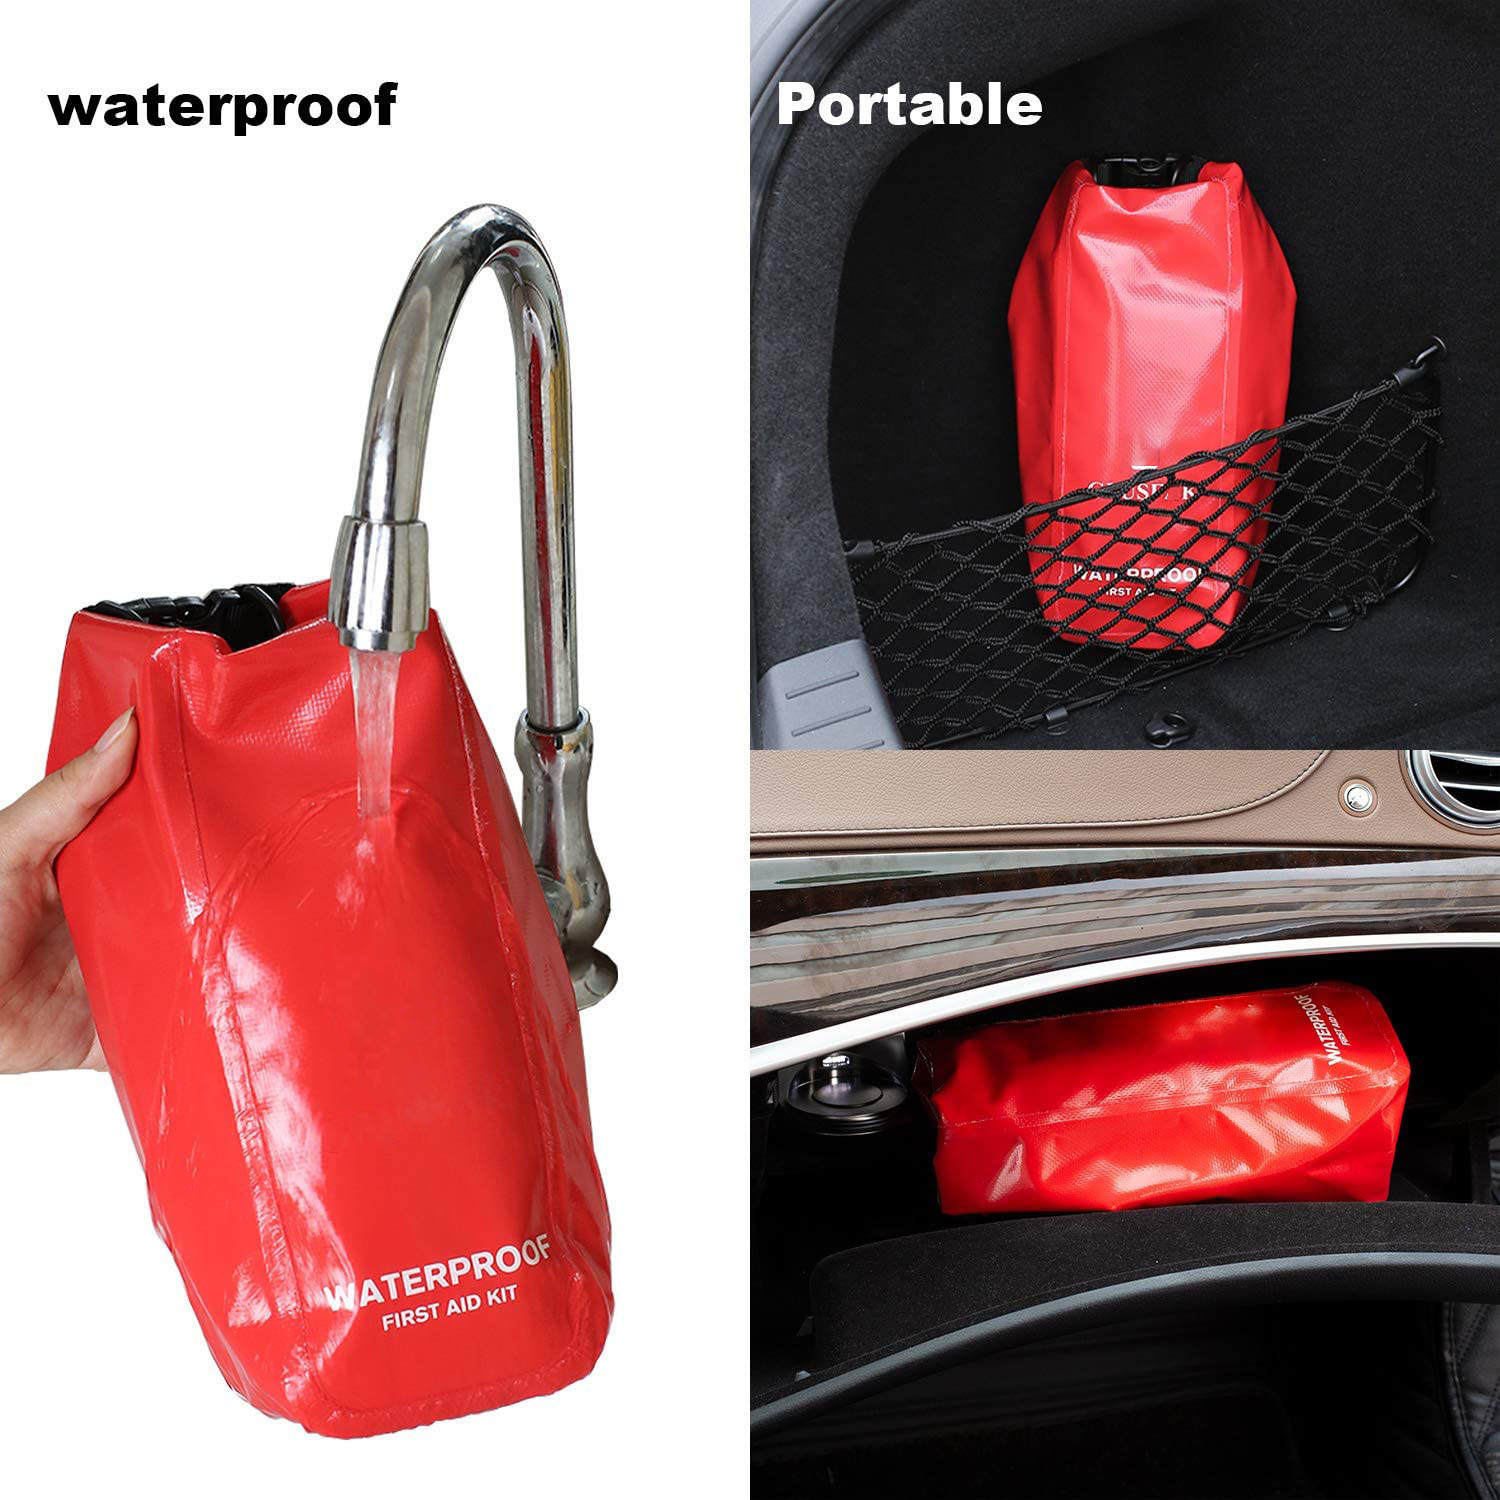 Waterproof Dry Bag First Aid Kit Bag for Kayaking